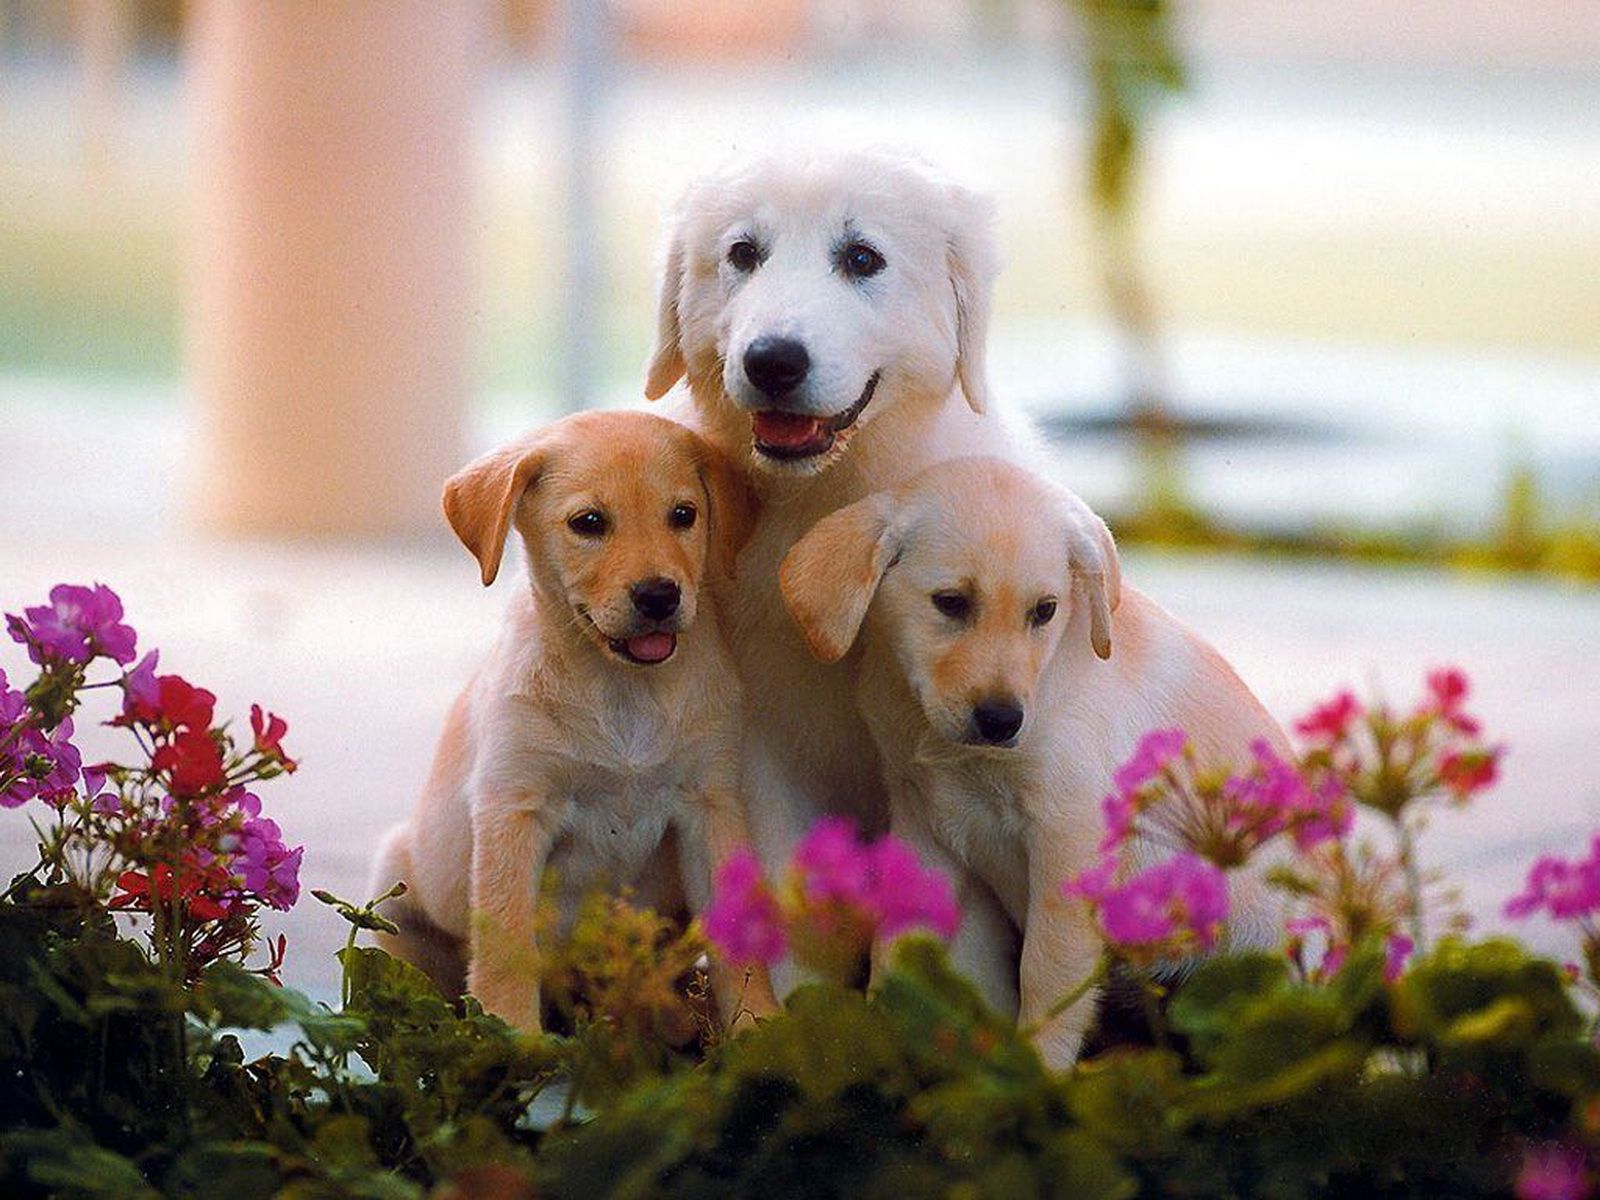 Image Detail for Dog HD wallpaperto5HDwallpaper. Cute dog wallpaper, Cute dogs image, Cute dog picture